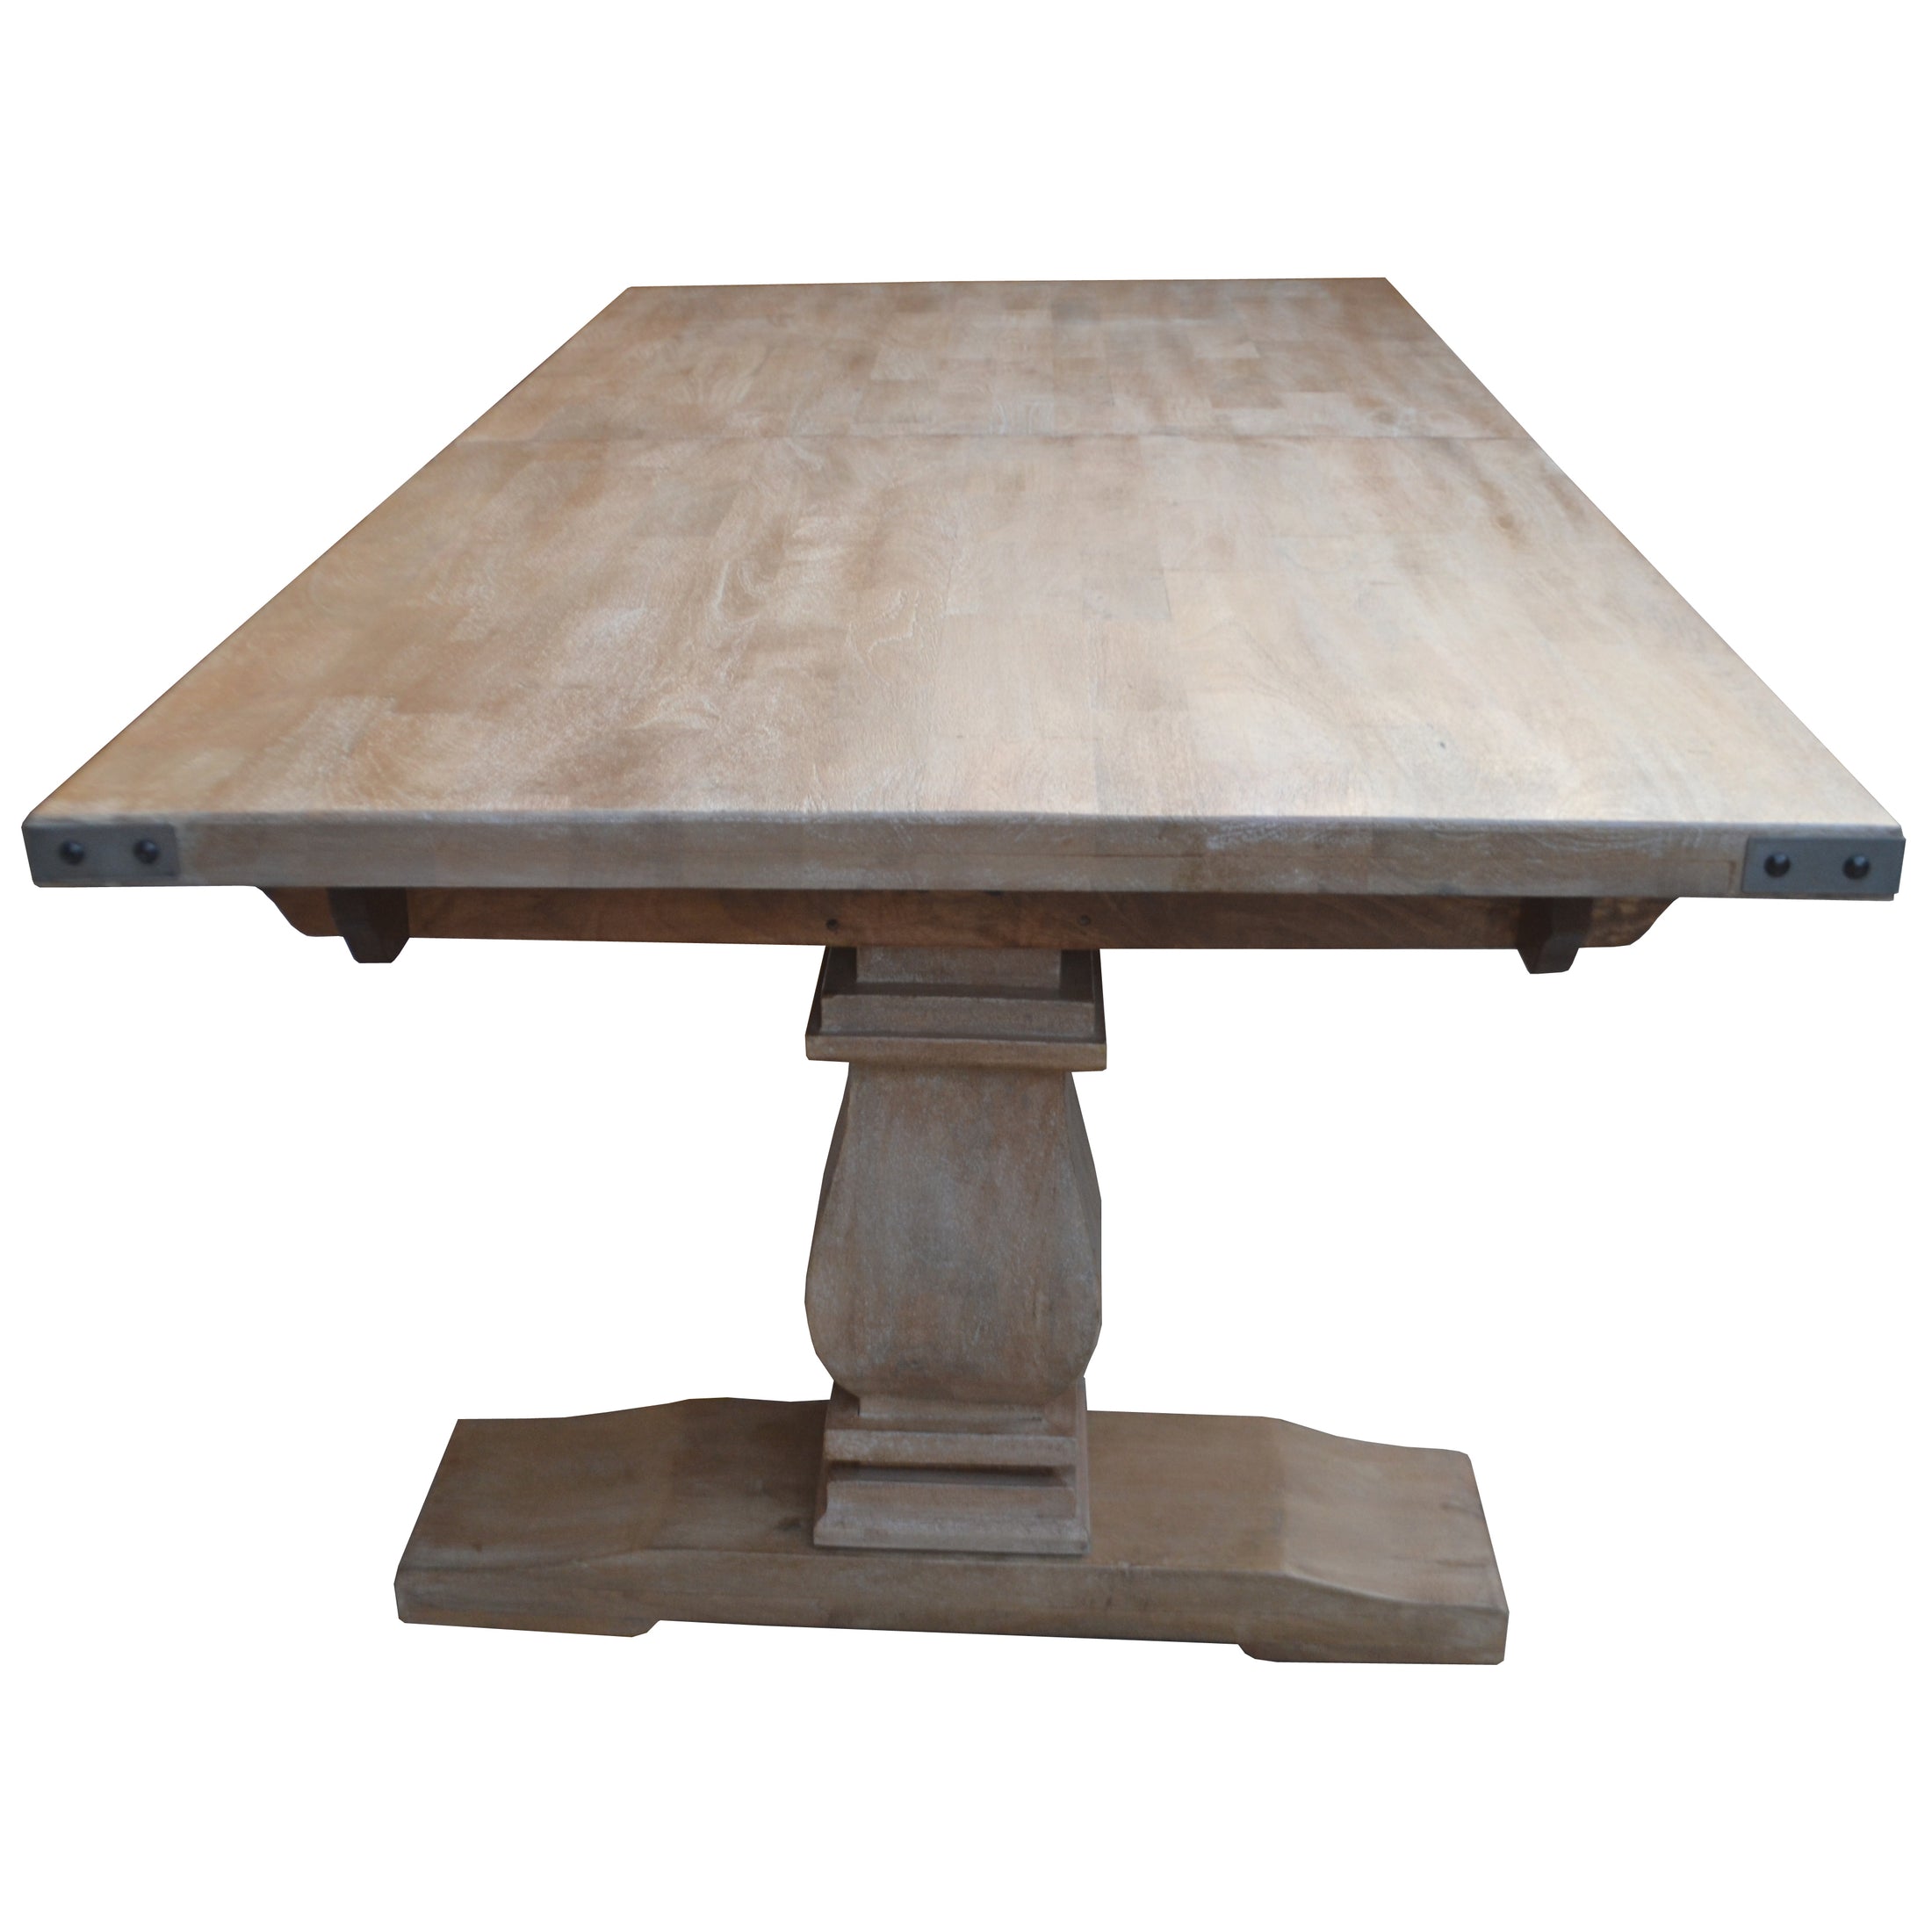 Gloriosa Dining Table 258-348cm Extendable Pedestal Mango Wood - Honey Wash